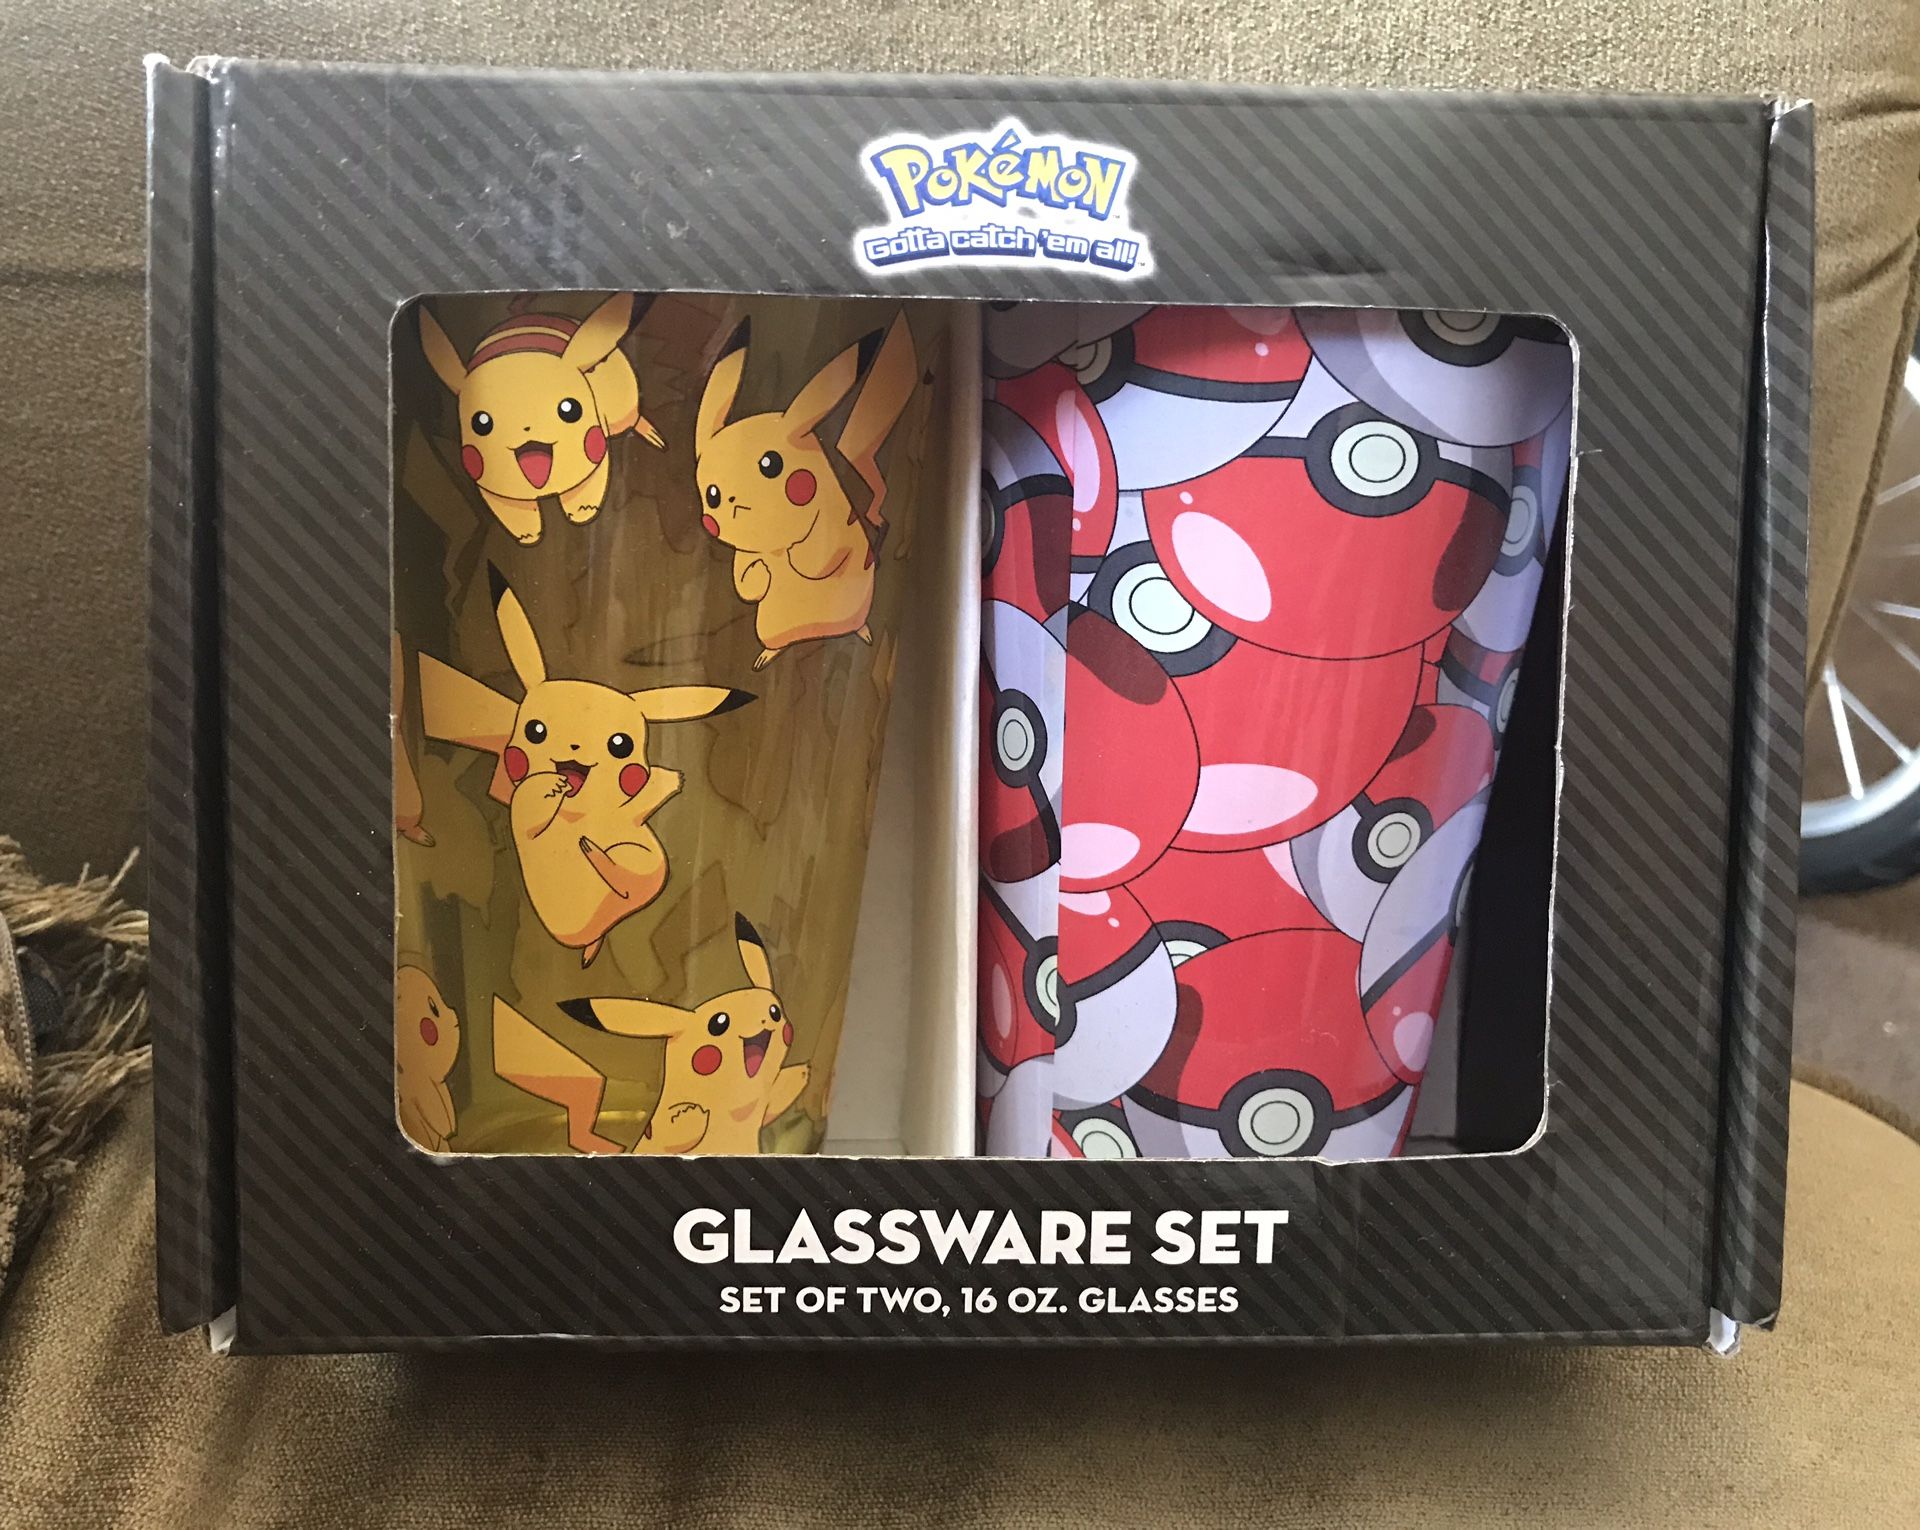 Pokémon Glassware set of 2, 16oz Glasses/Cups